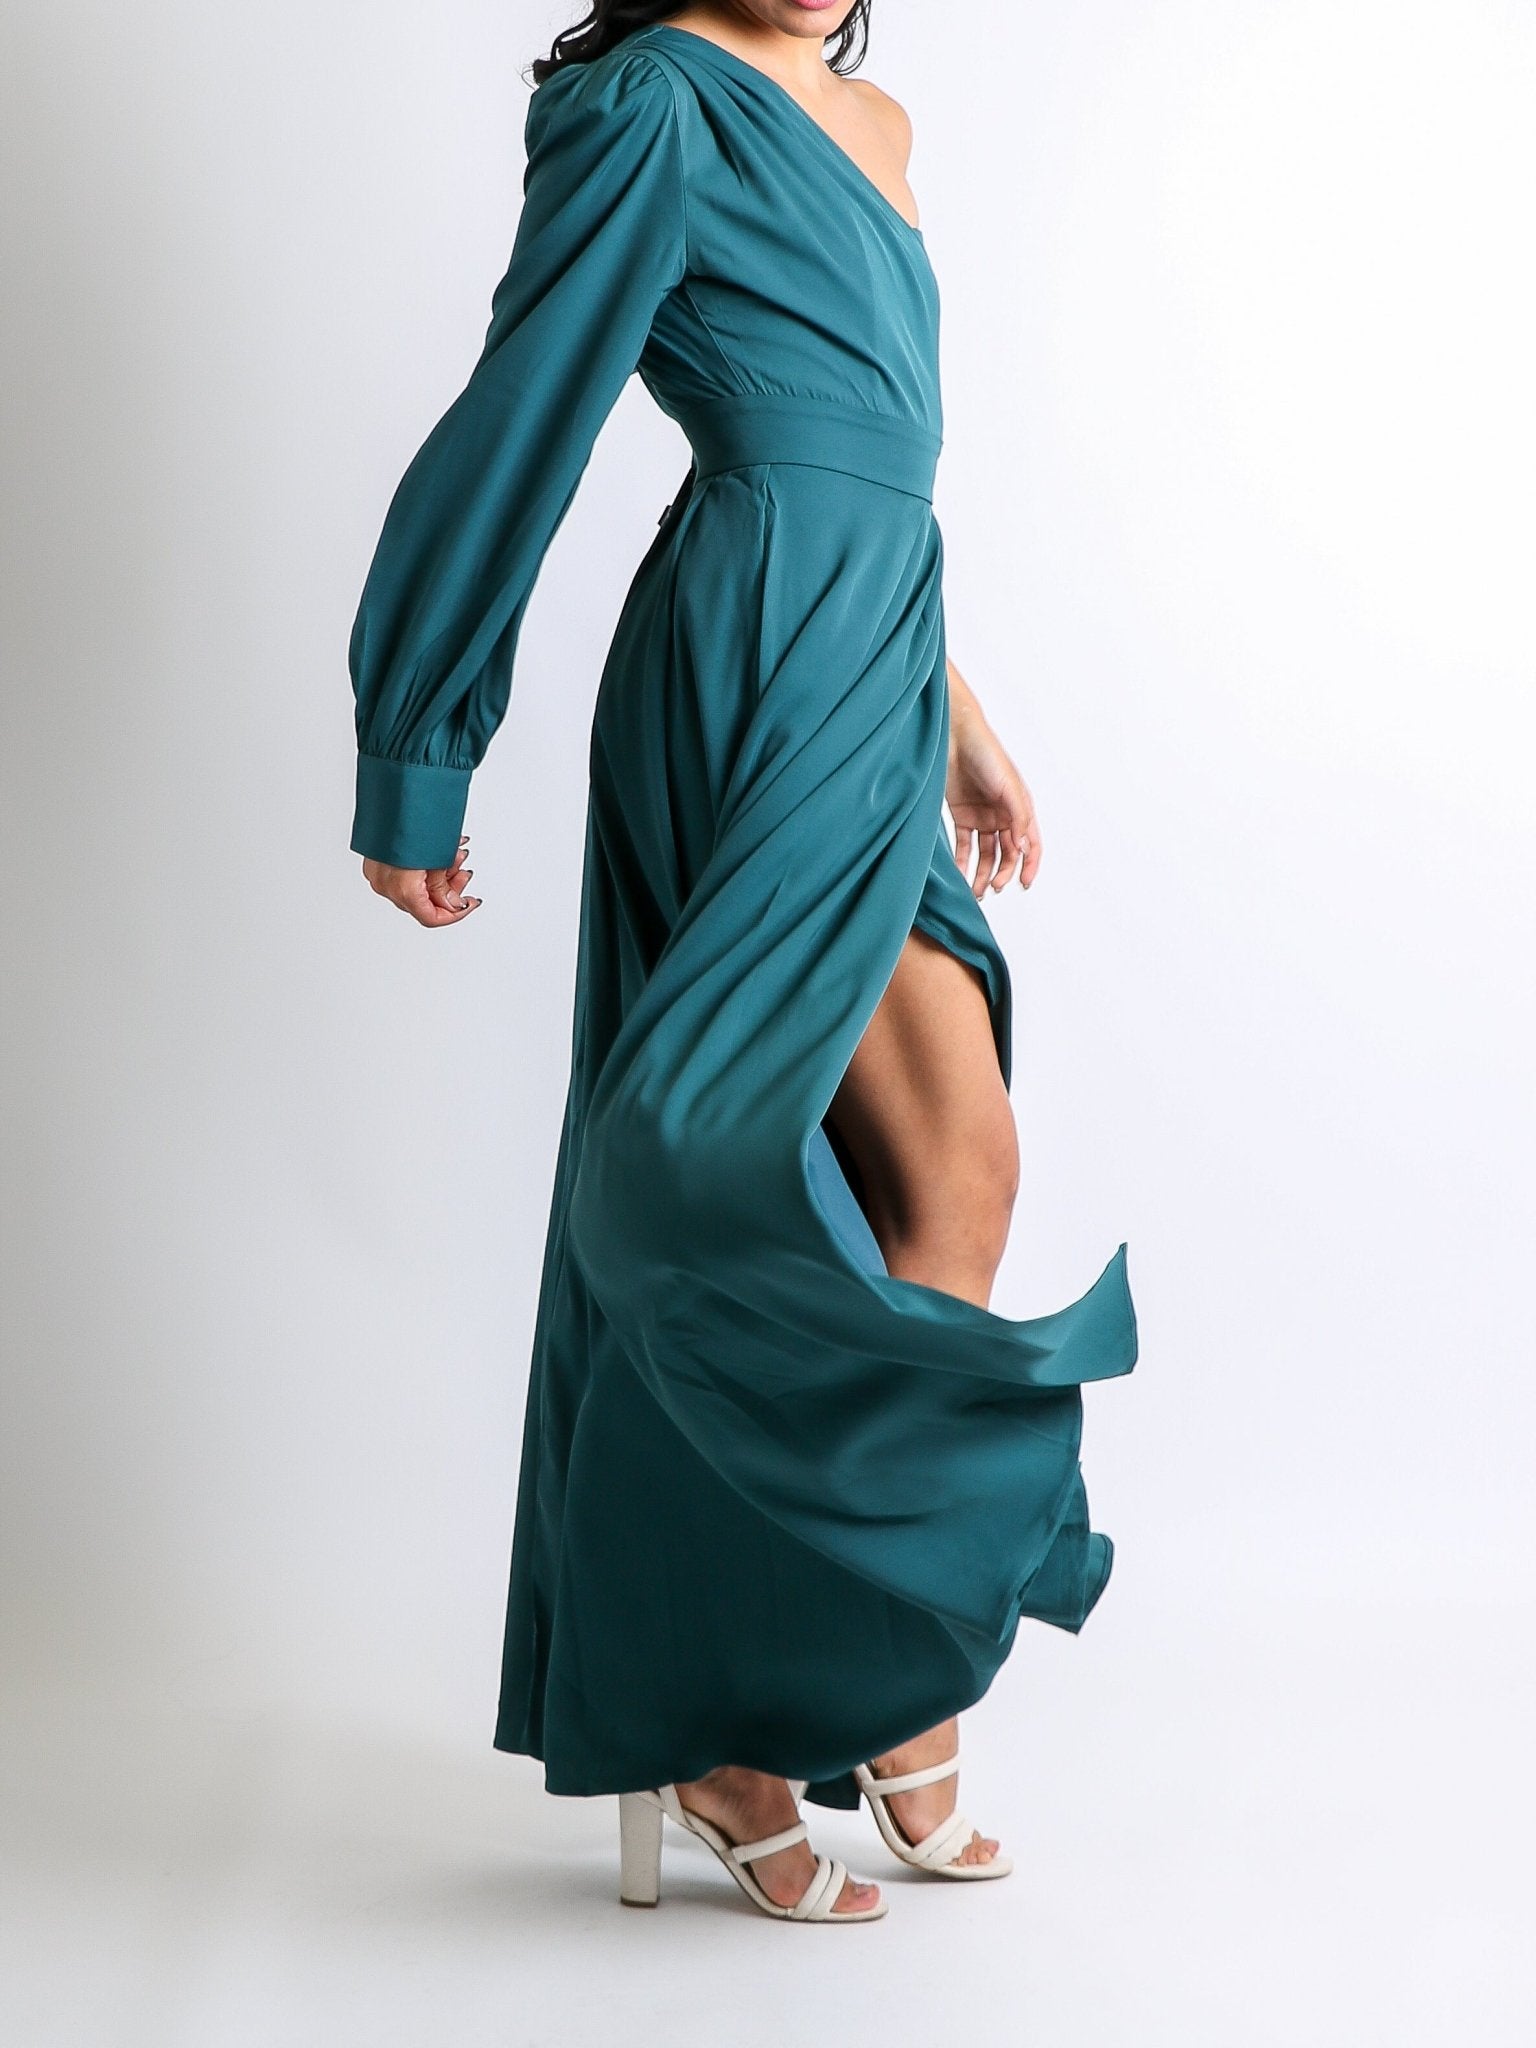 Carla - venta - Lend the Trend renta de vestidos mexico